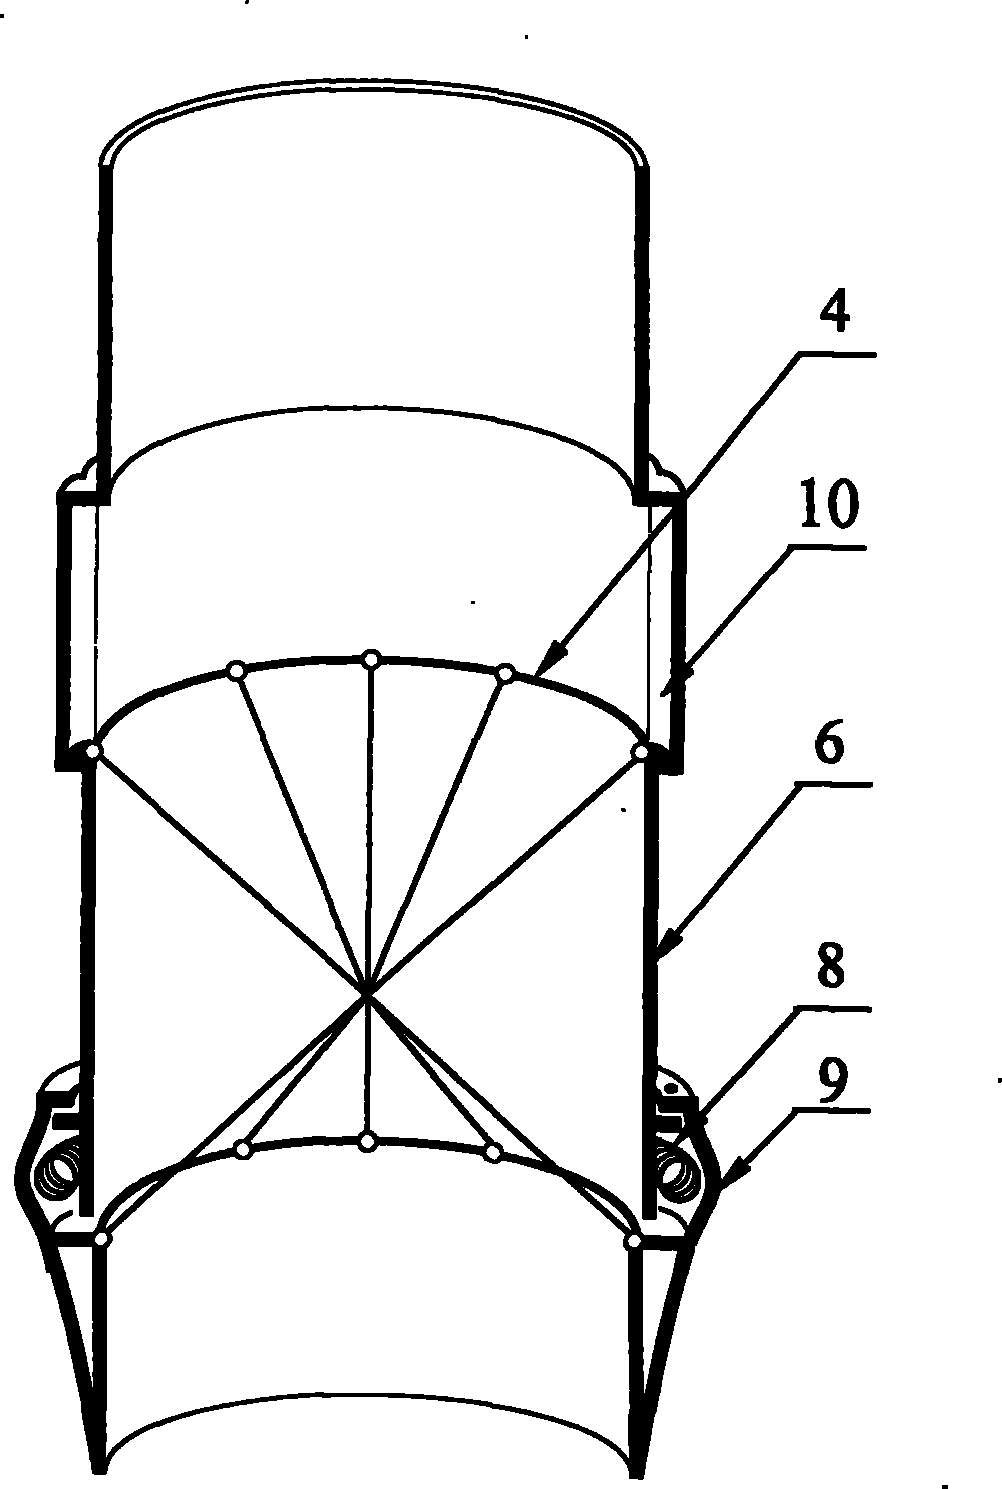 Bottom mud column-shaped sampling apparatus